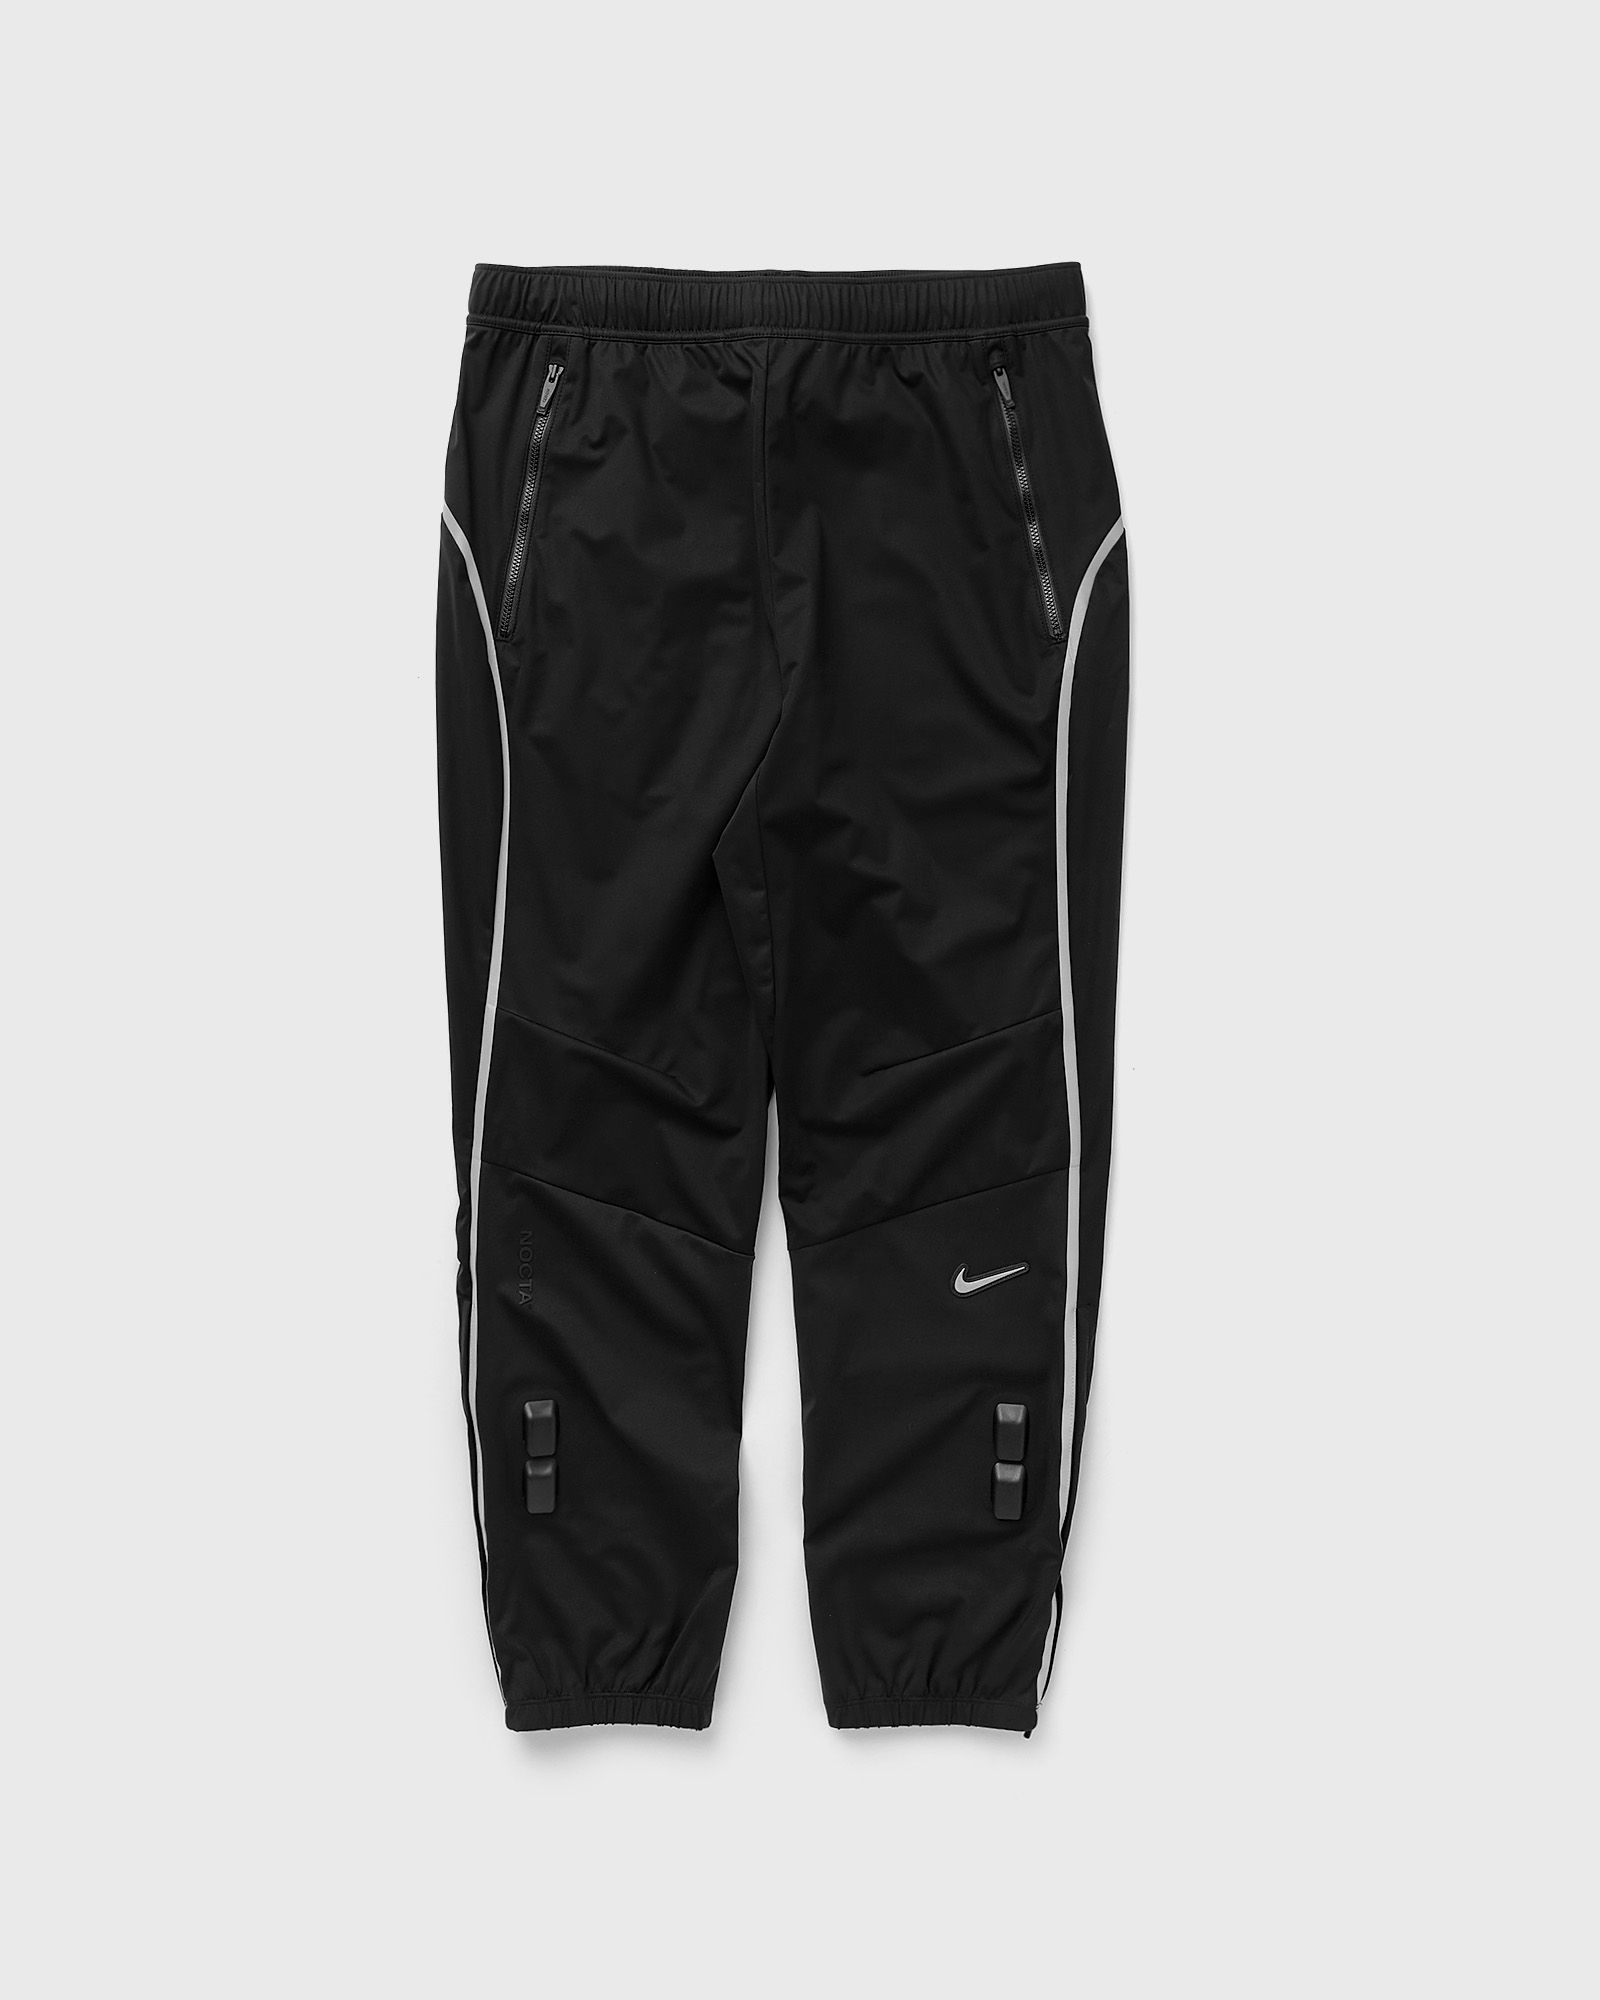 Nike NOCTA X NIKE Pants Black | BSTN Store